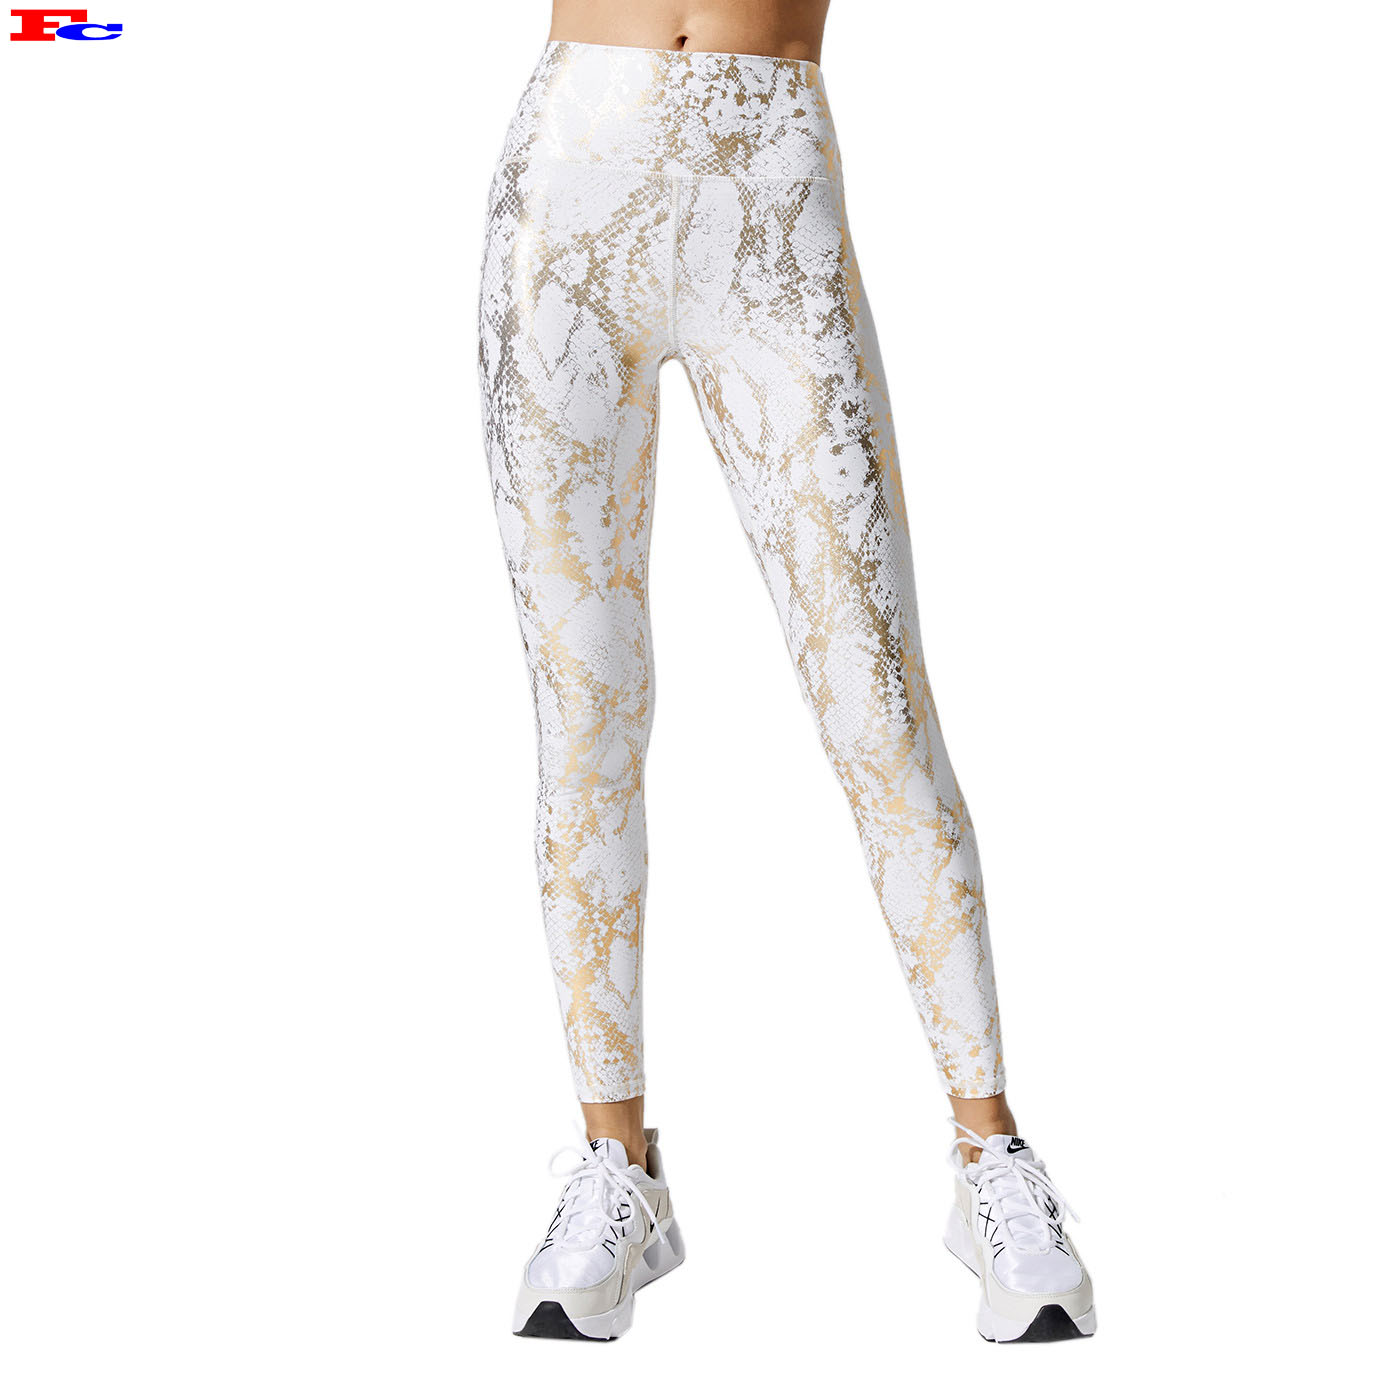 High-waisted yoga pants wholesale with slant pockets - Tsingyisports